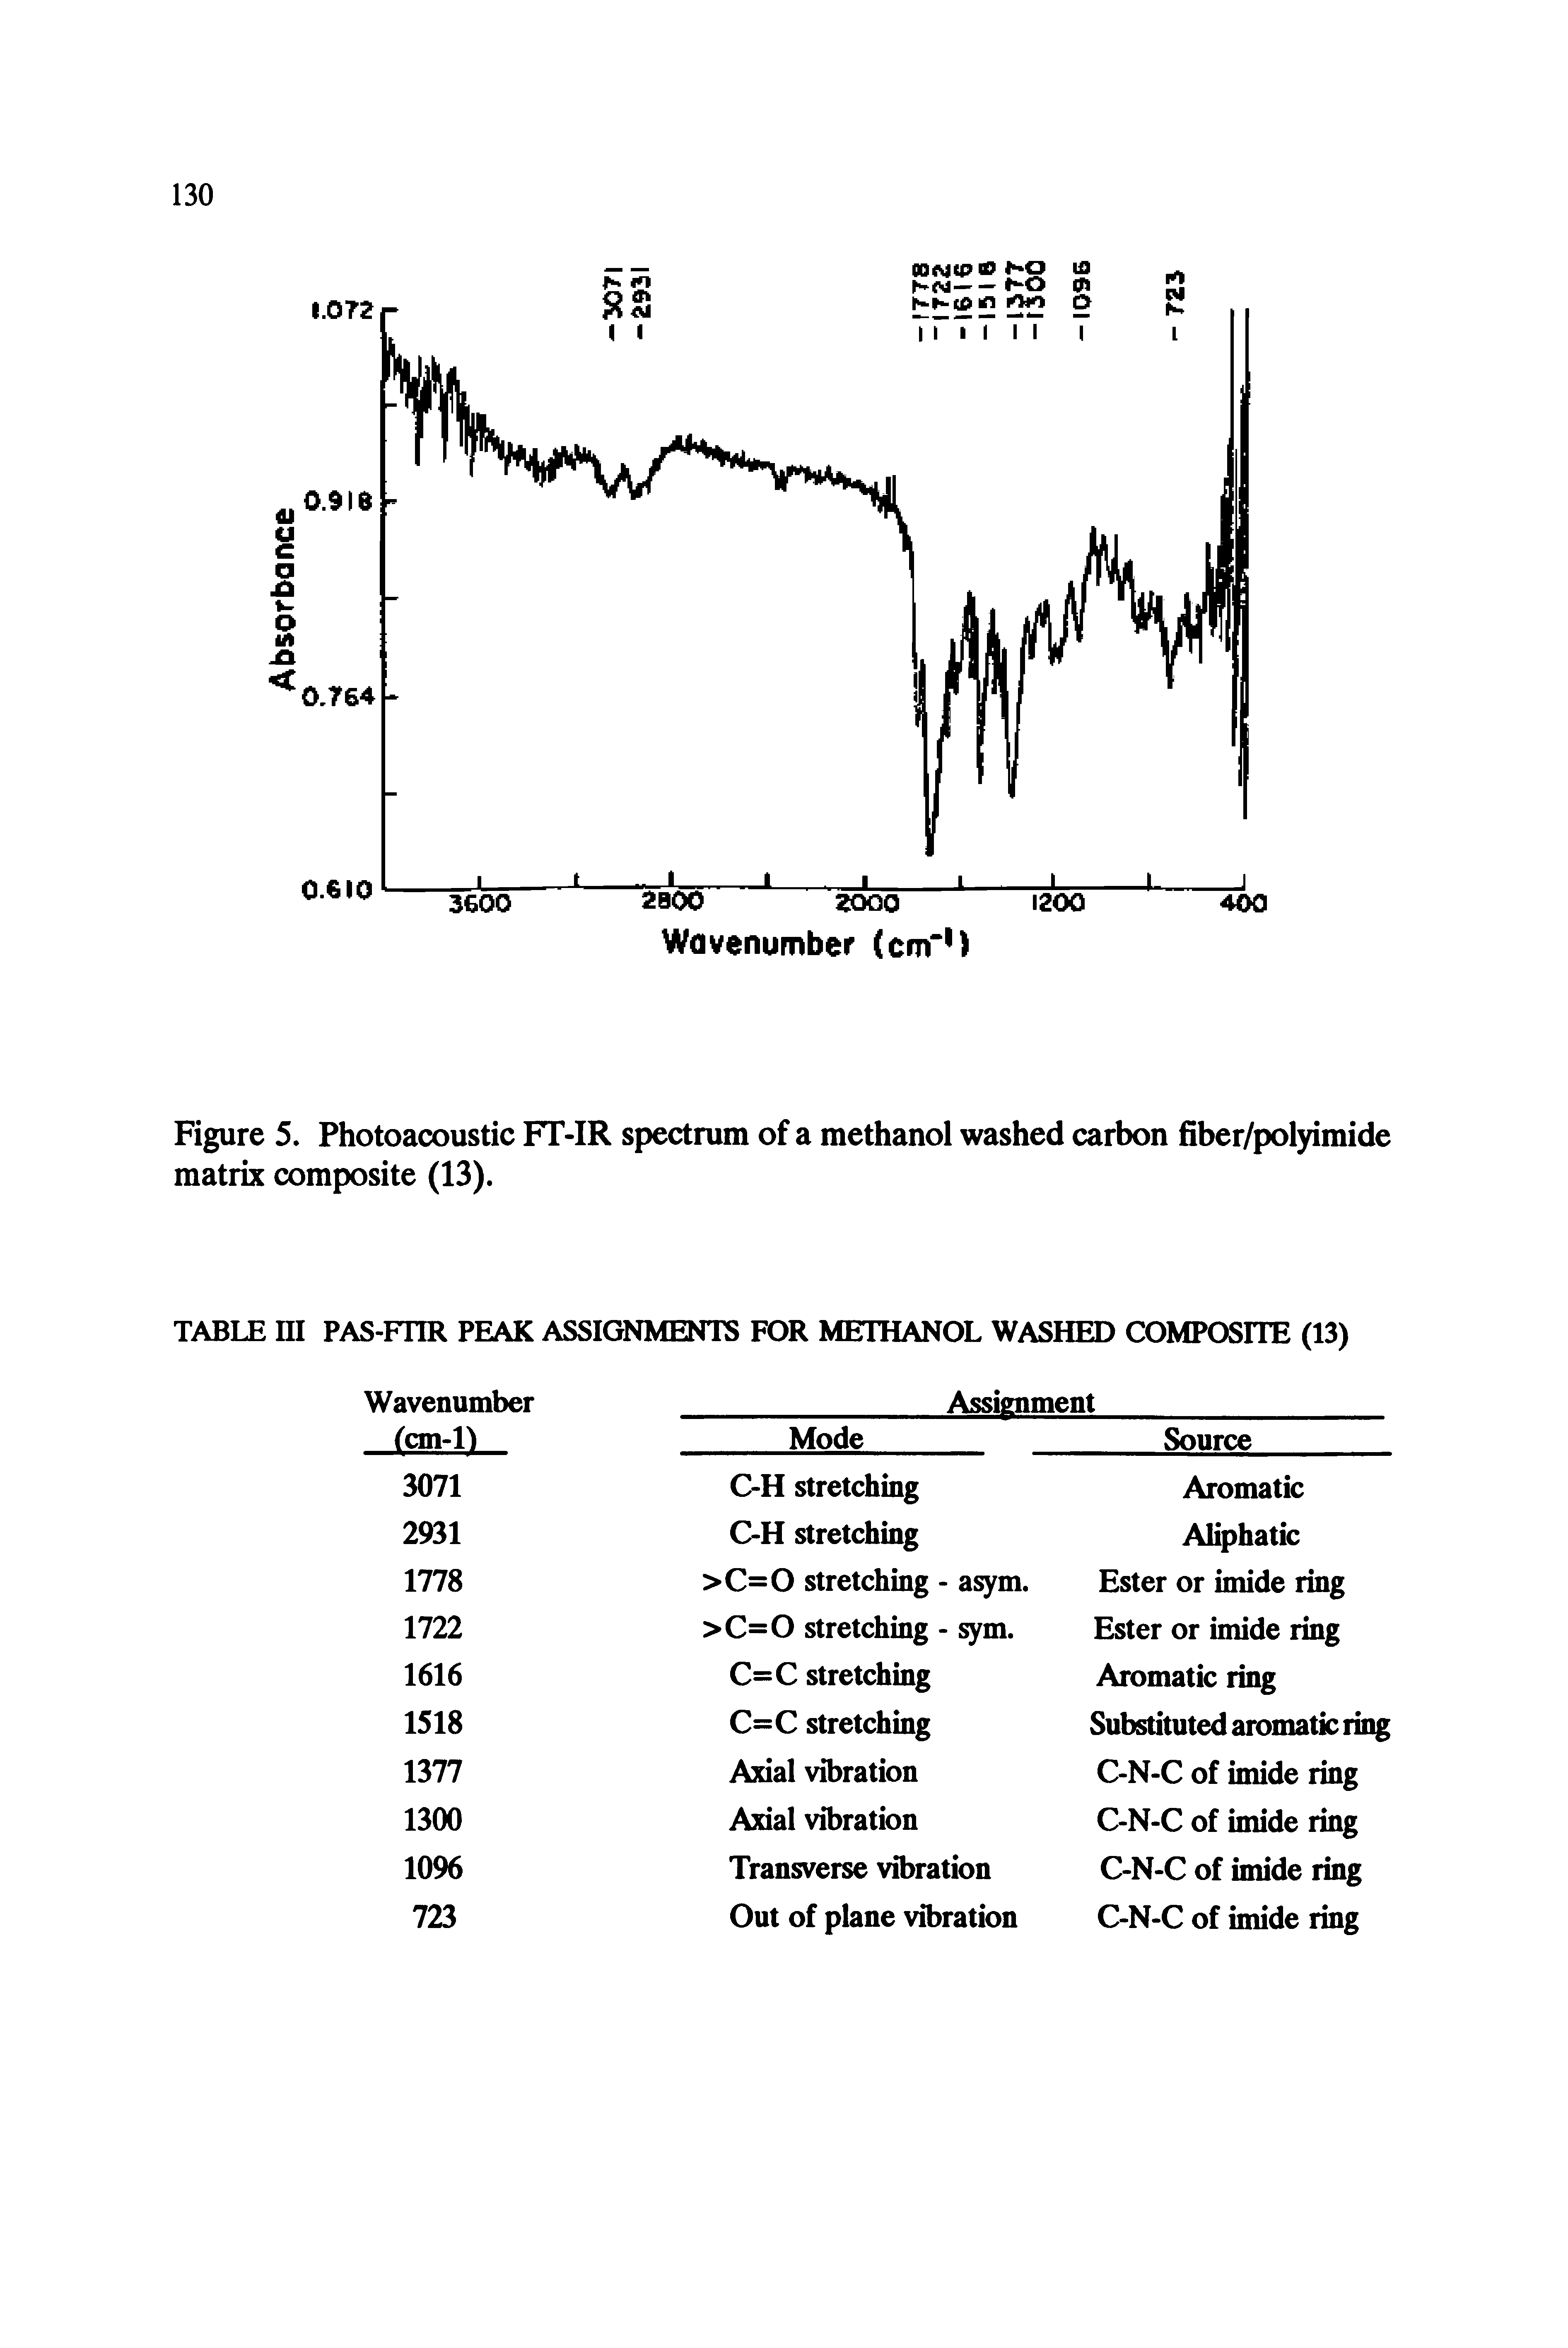 Figure 5. Photoacoustic FT-IR spectrum of a methanol washed carbon fiber/polyimide matrix composite (13).